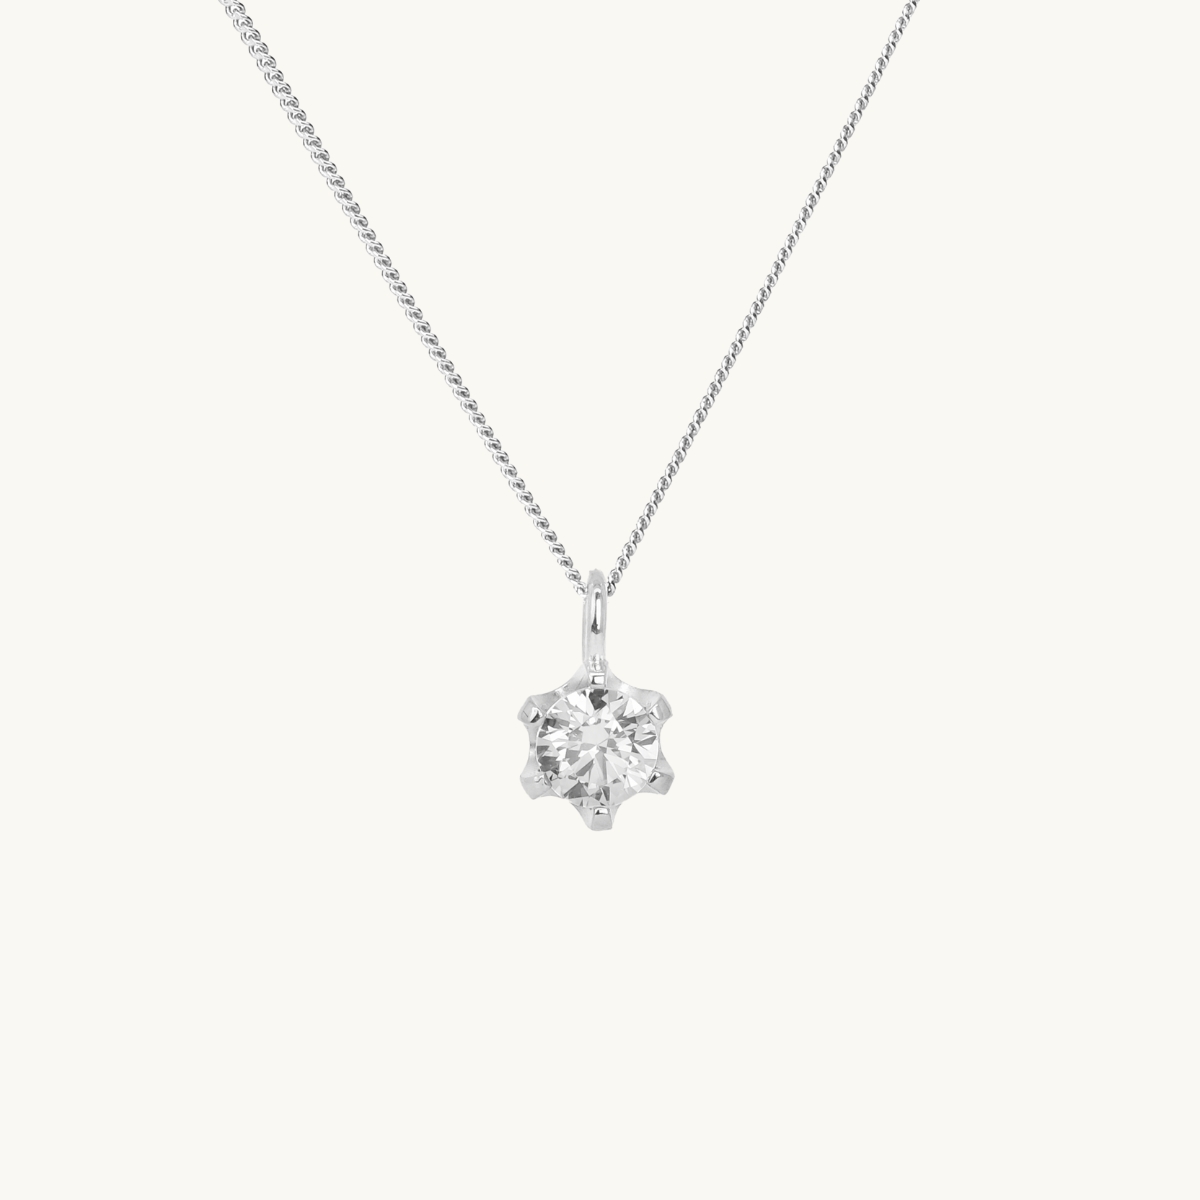 Necklace pendant silver with a white diamond, princess